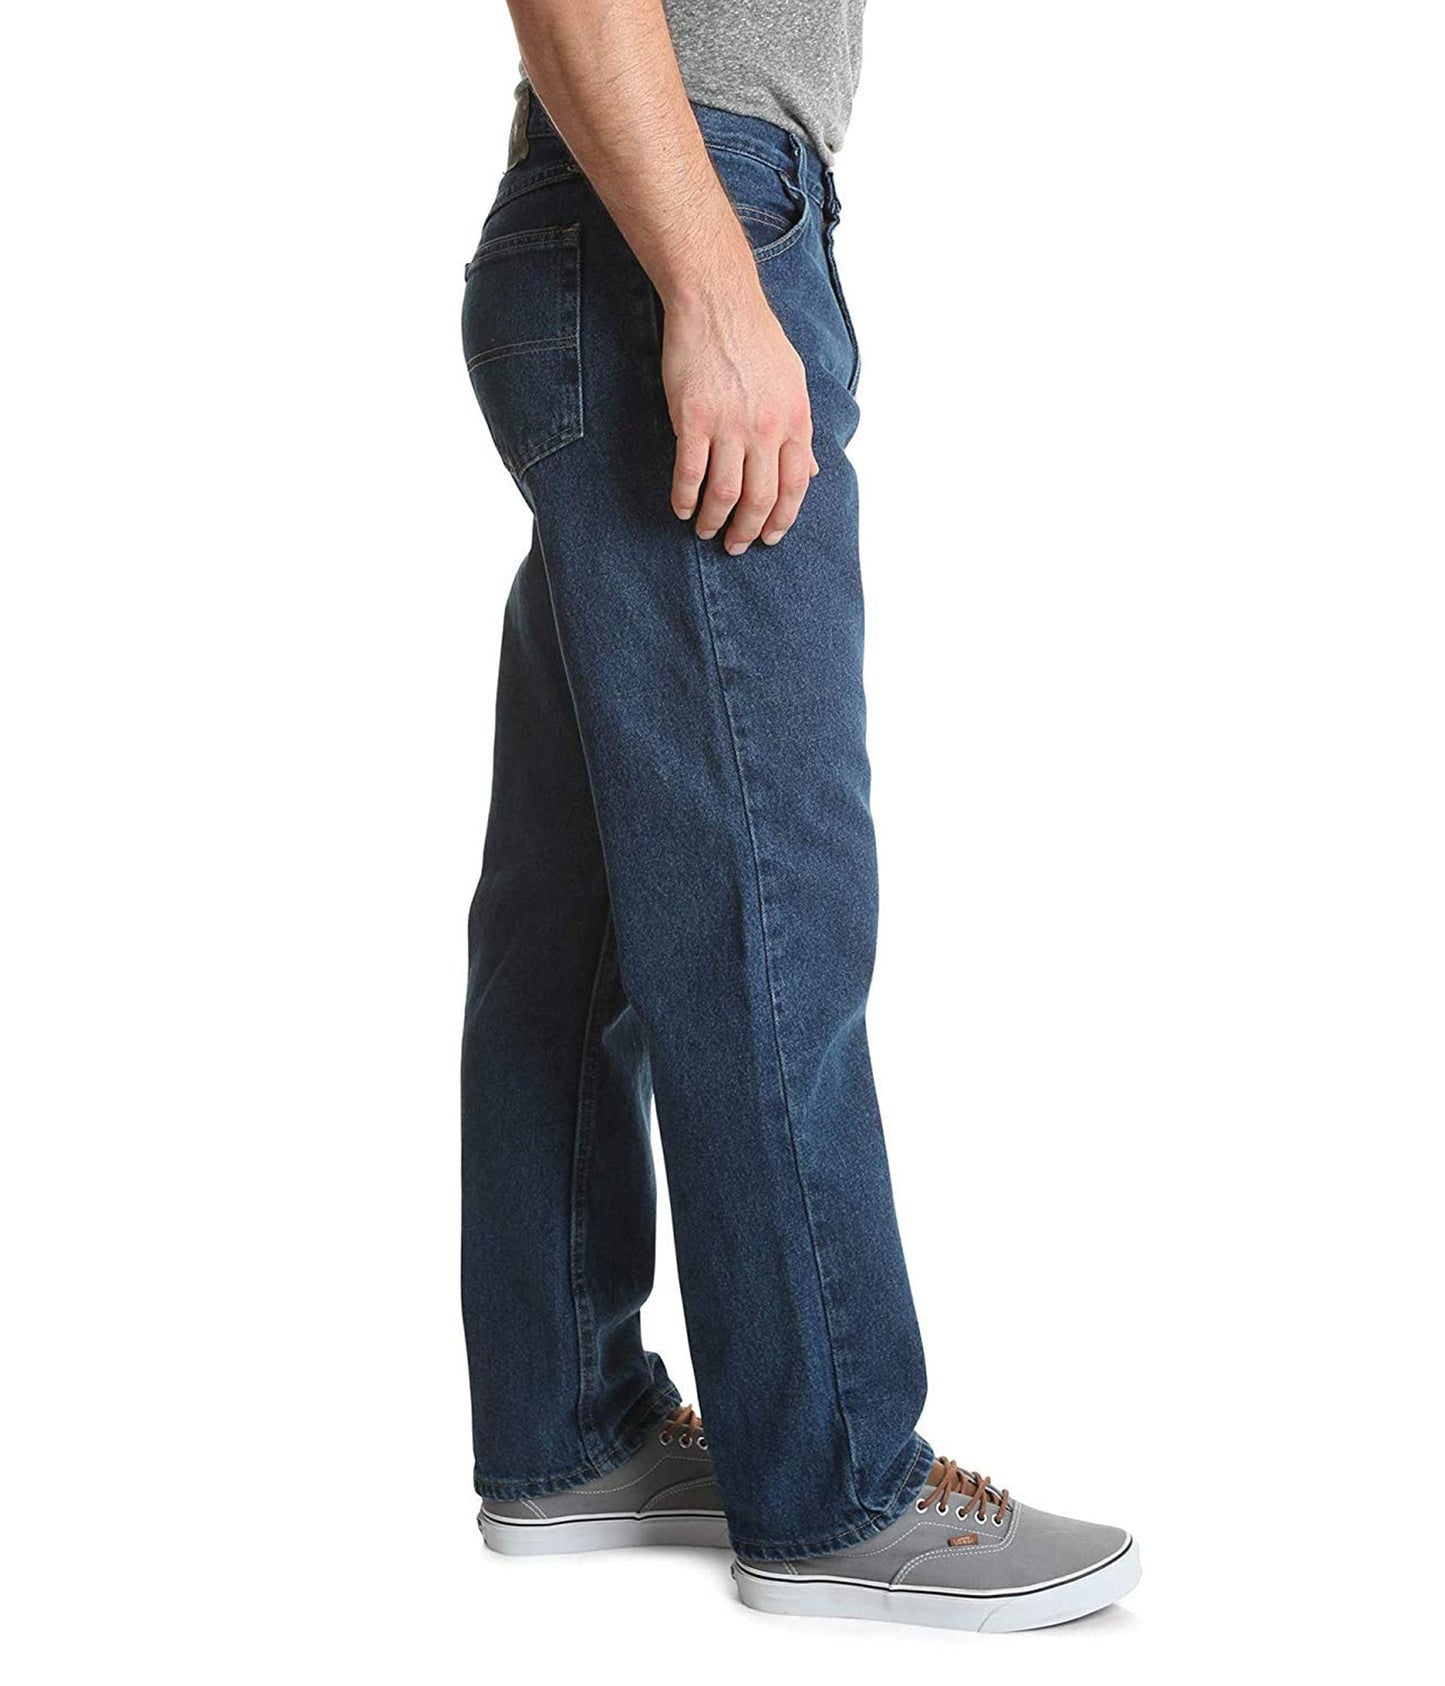 Wrangler Authentics Men's Classic 5-Pocket Relaxed Fit Cotton Jean, Dark Stonewash, 38W x 34L